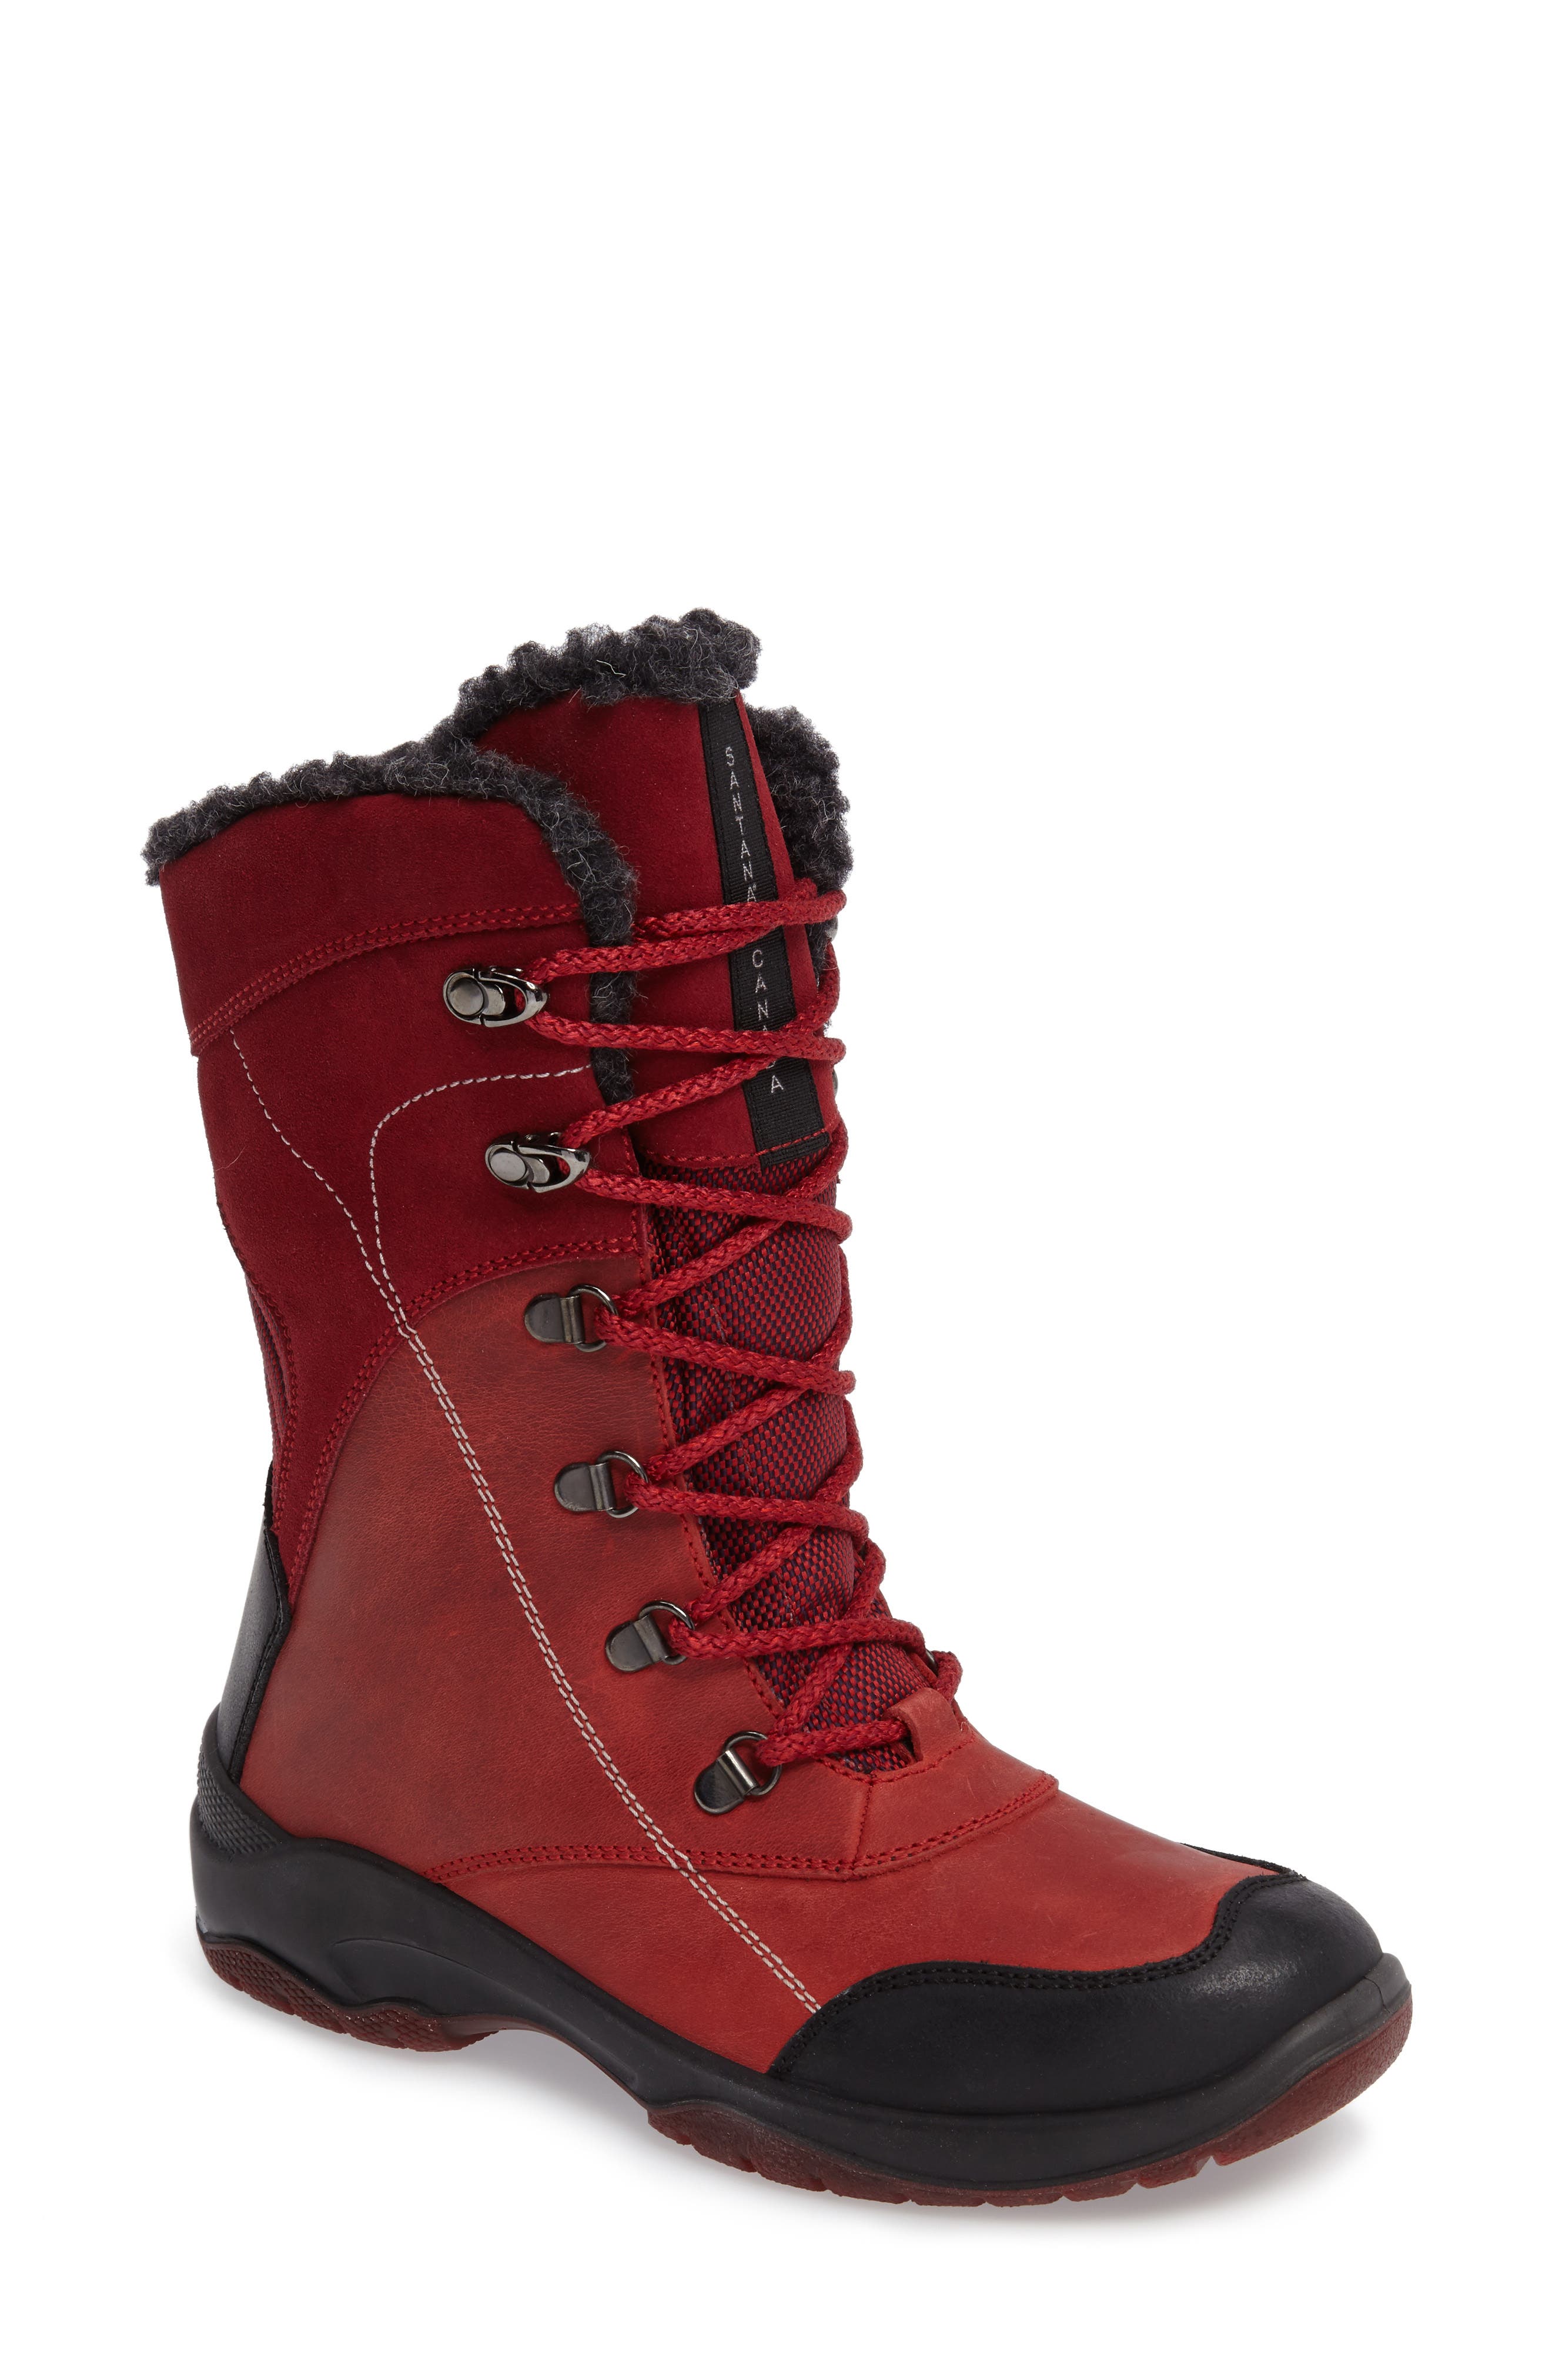 santana canada red boots